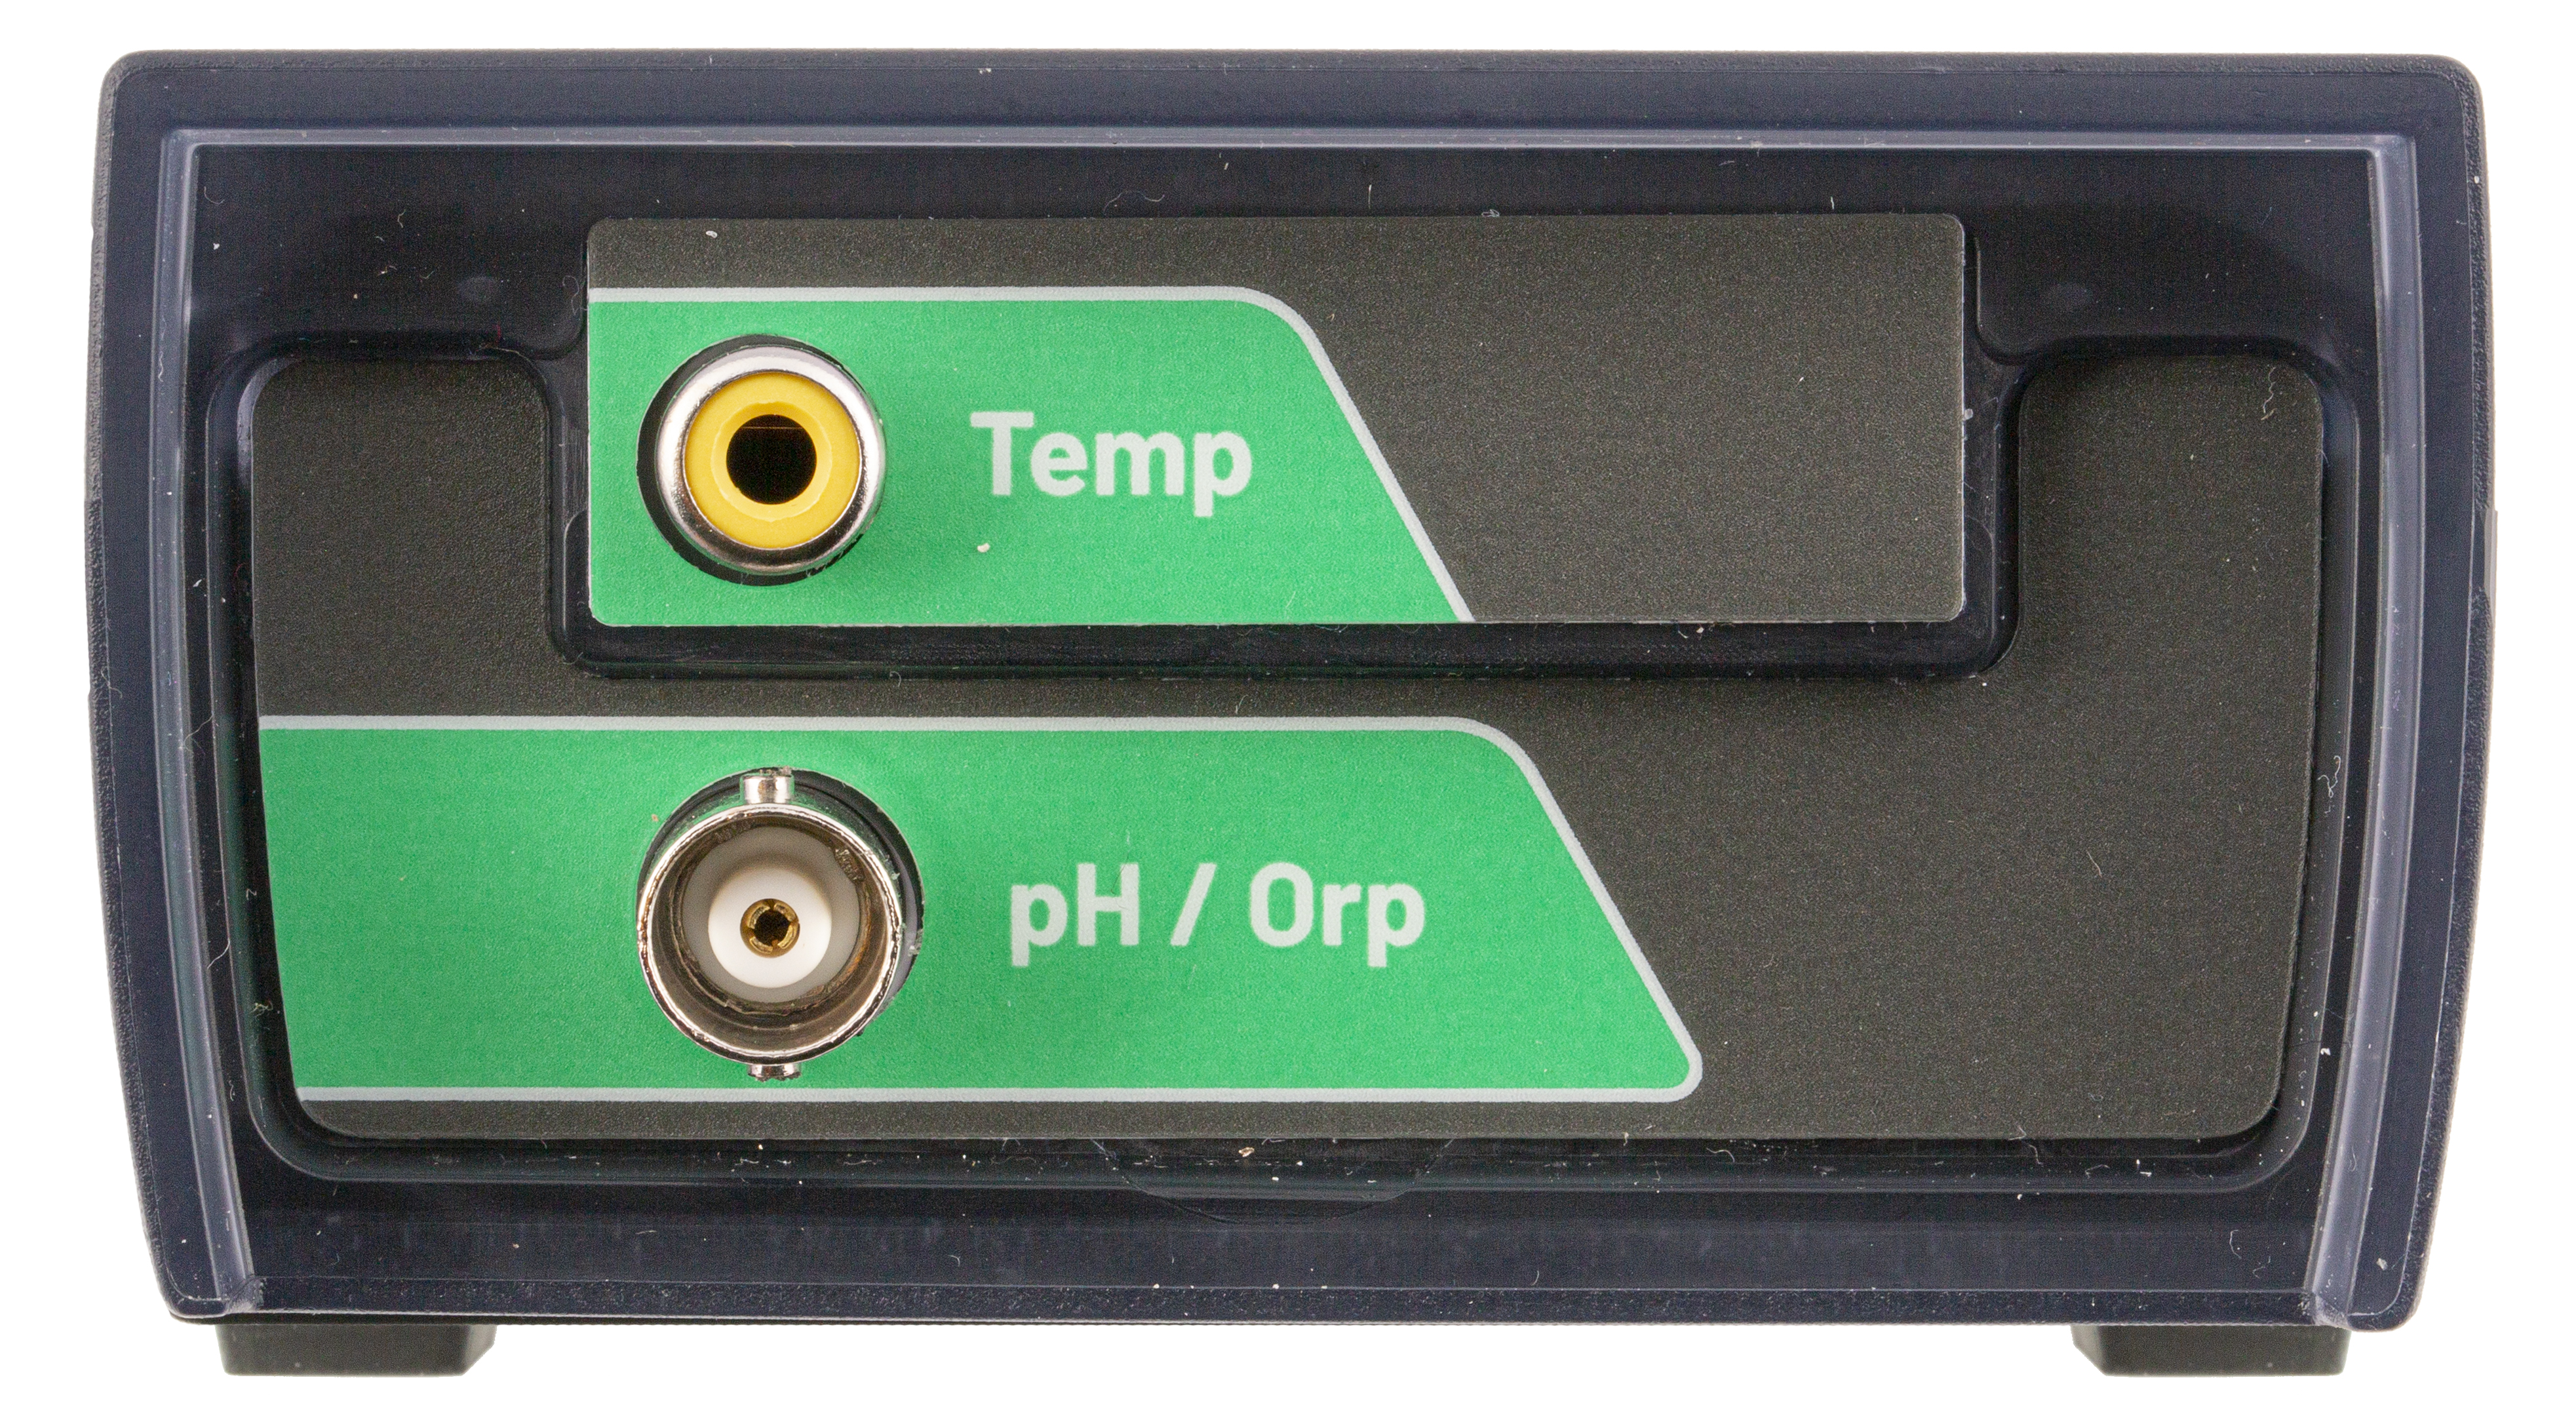 XS pH 7 Vio portable pH meter with 201T electrode